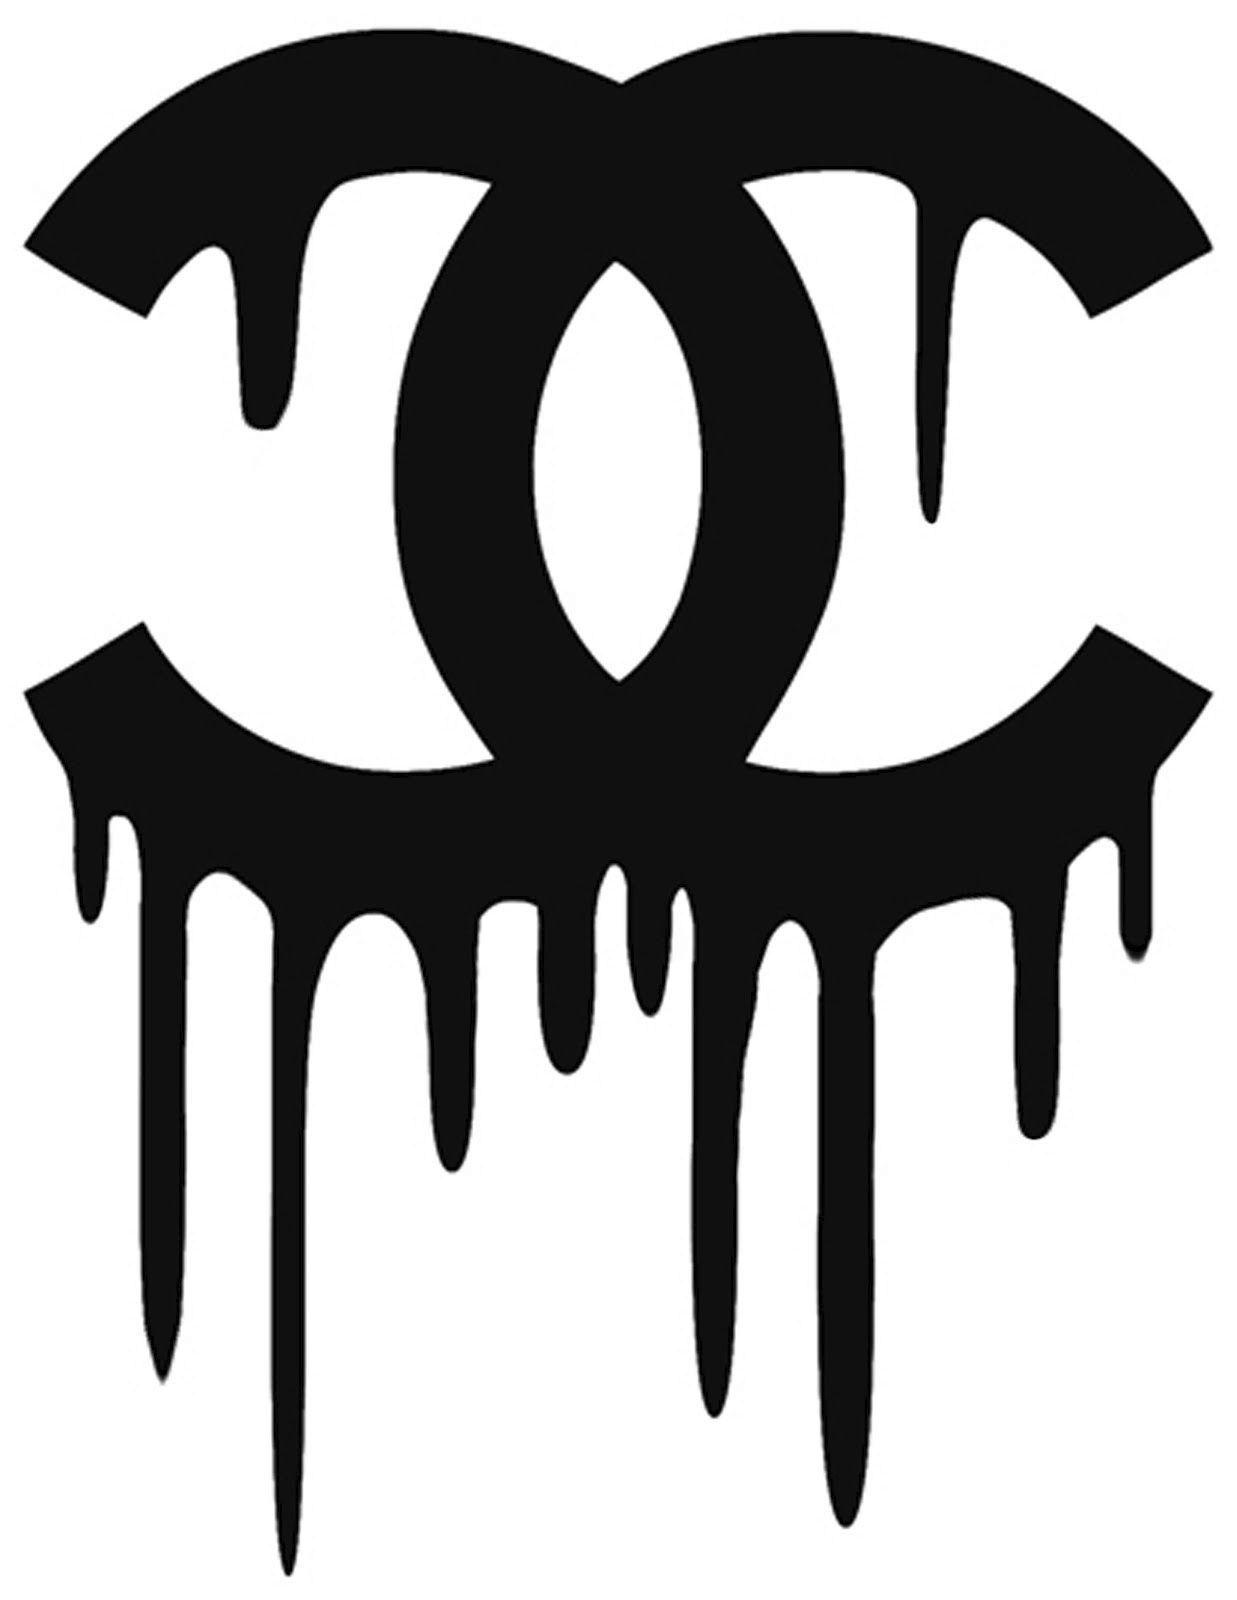 Black and White Chanel Logo - Art and design. Chanel logo, Chanel, Coco